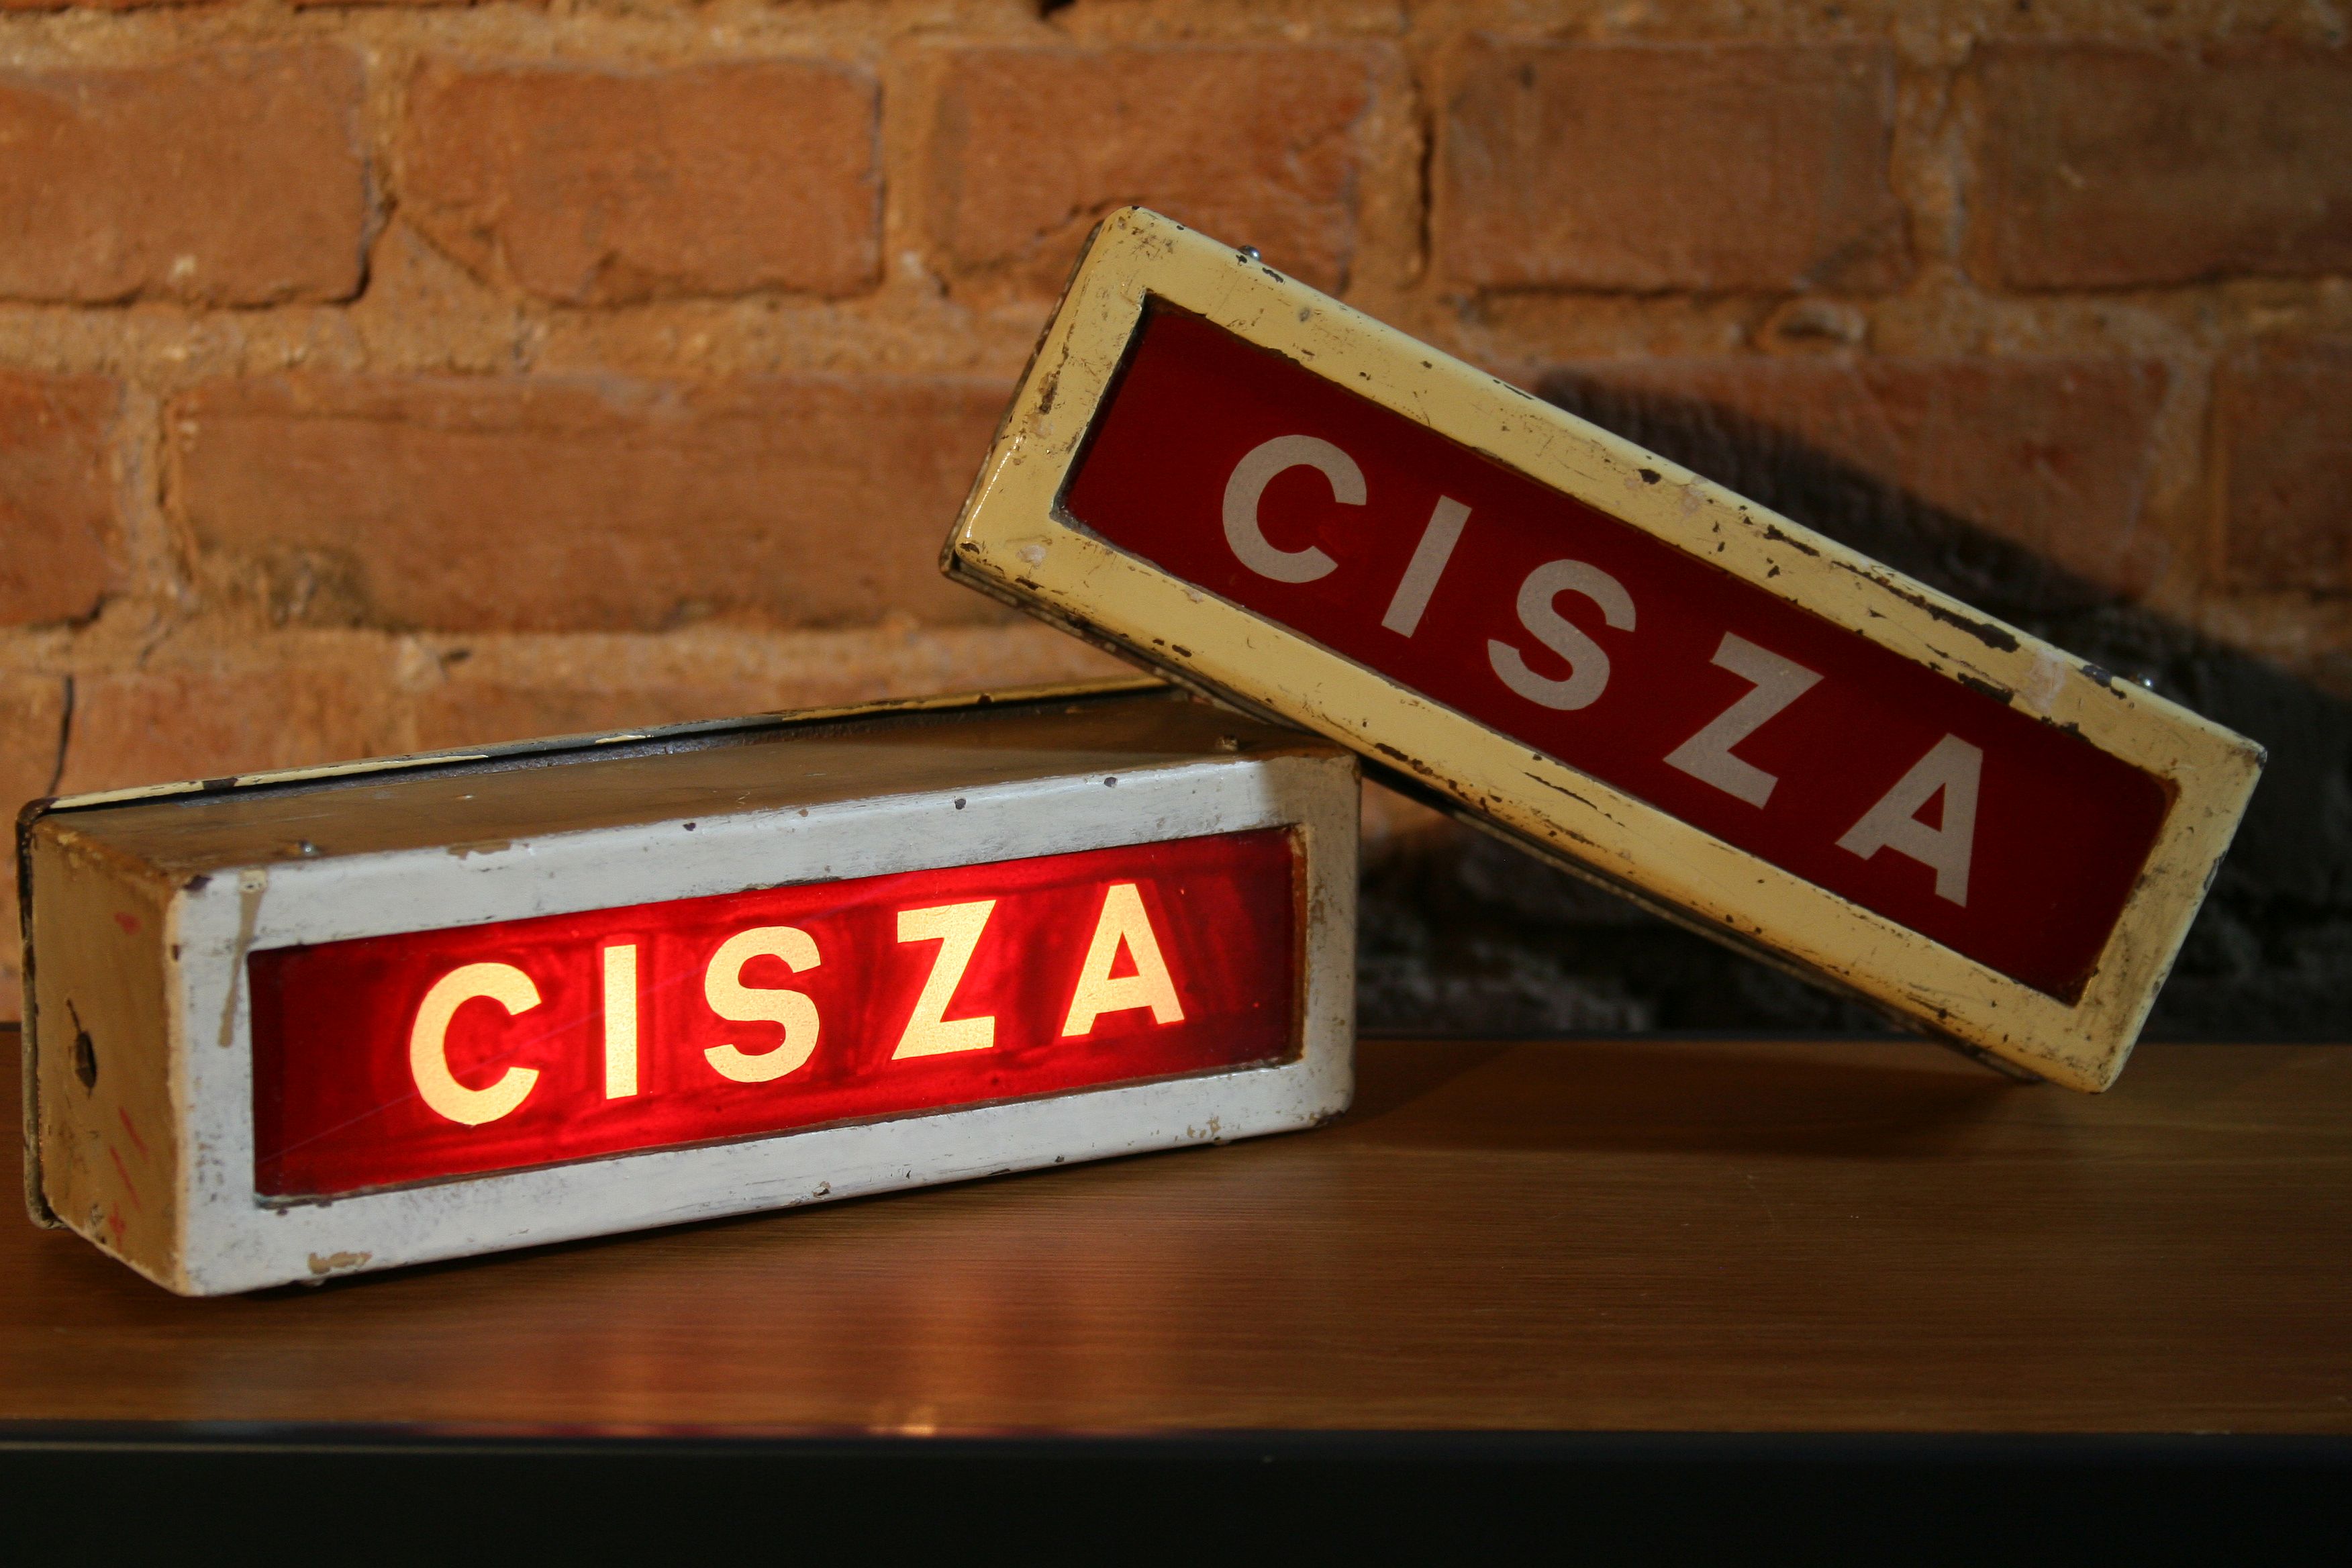 Illuminated Theater Sign “CISZA”, Meaning “Silence ...
